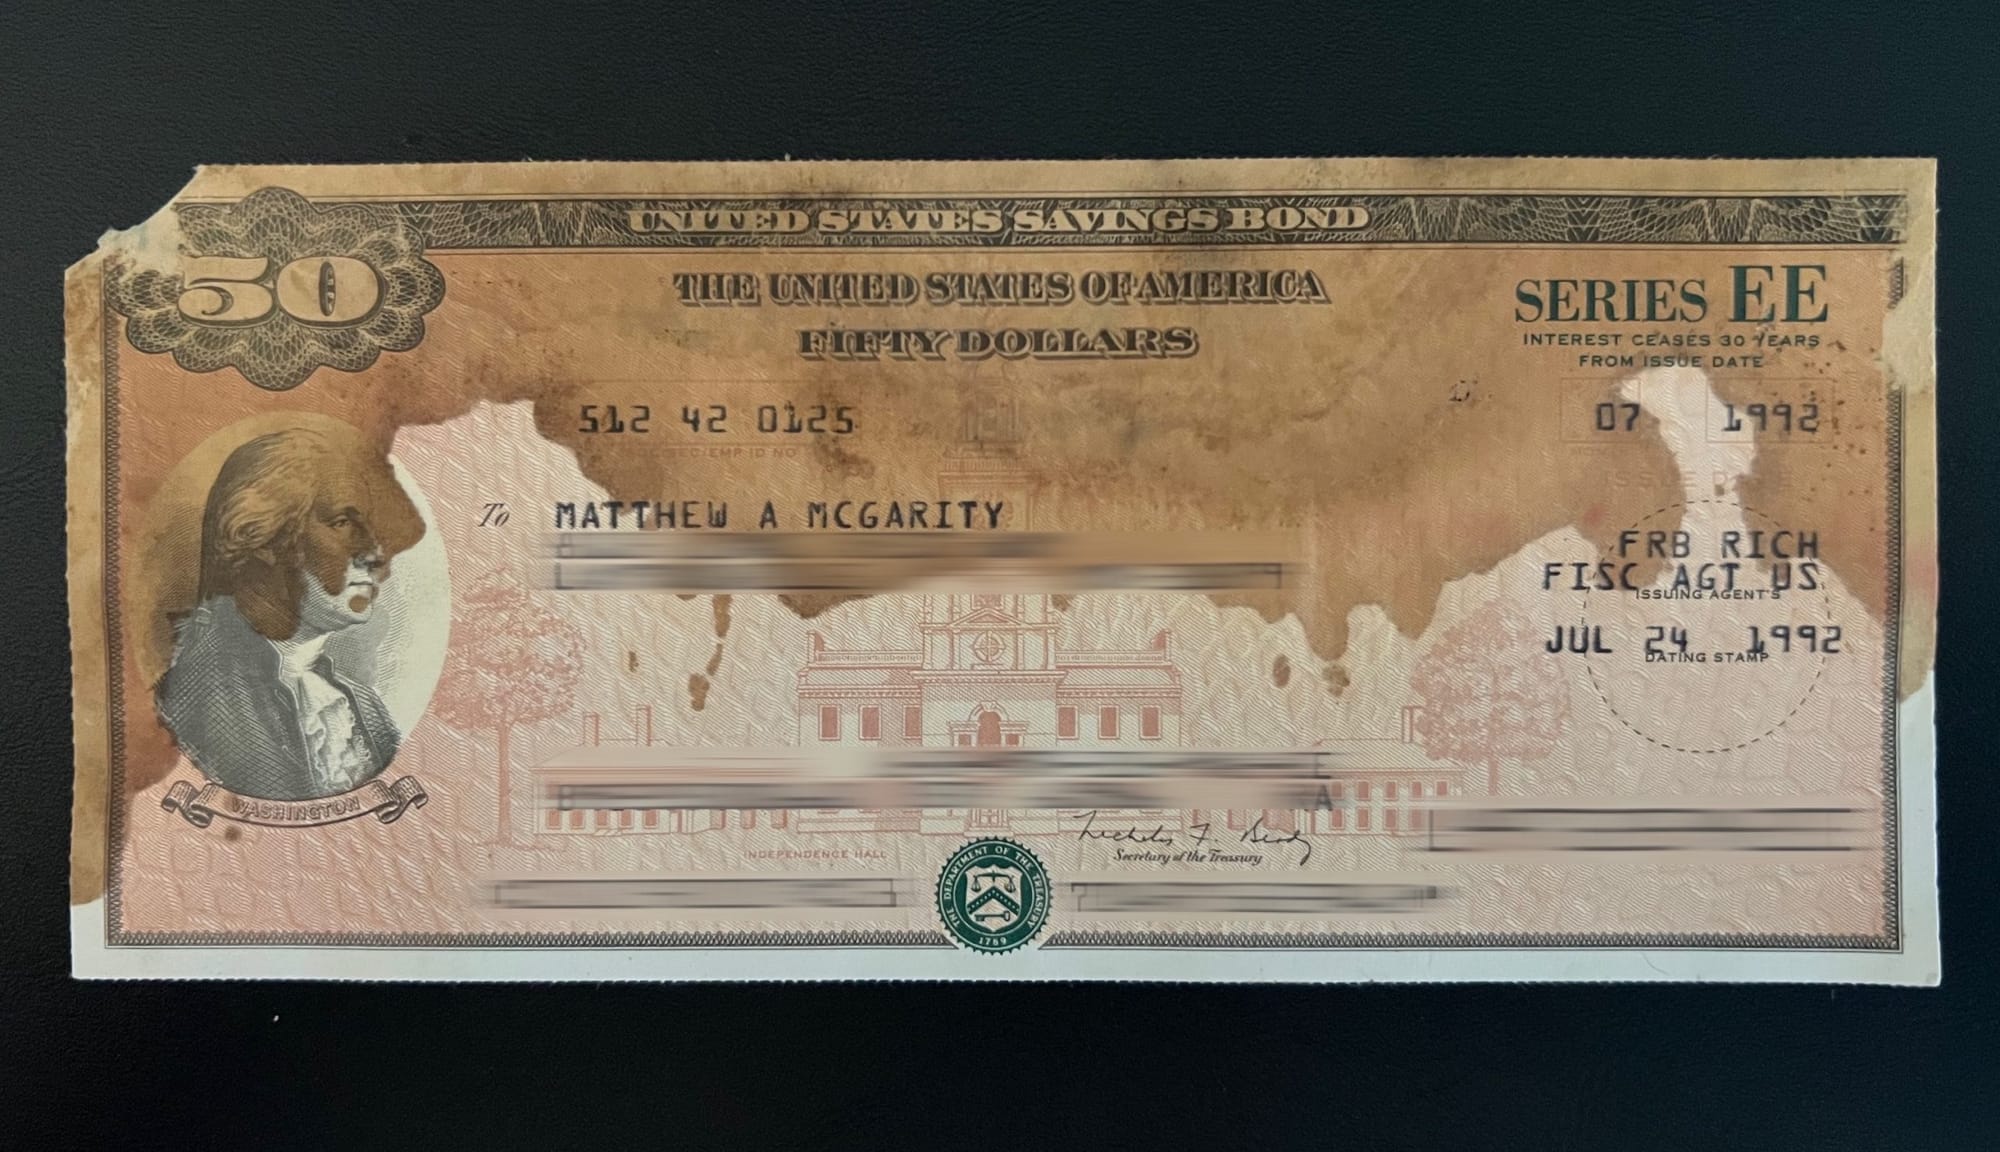 Full photo of my U.S. Treasury Savings Bond.